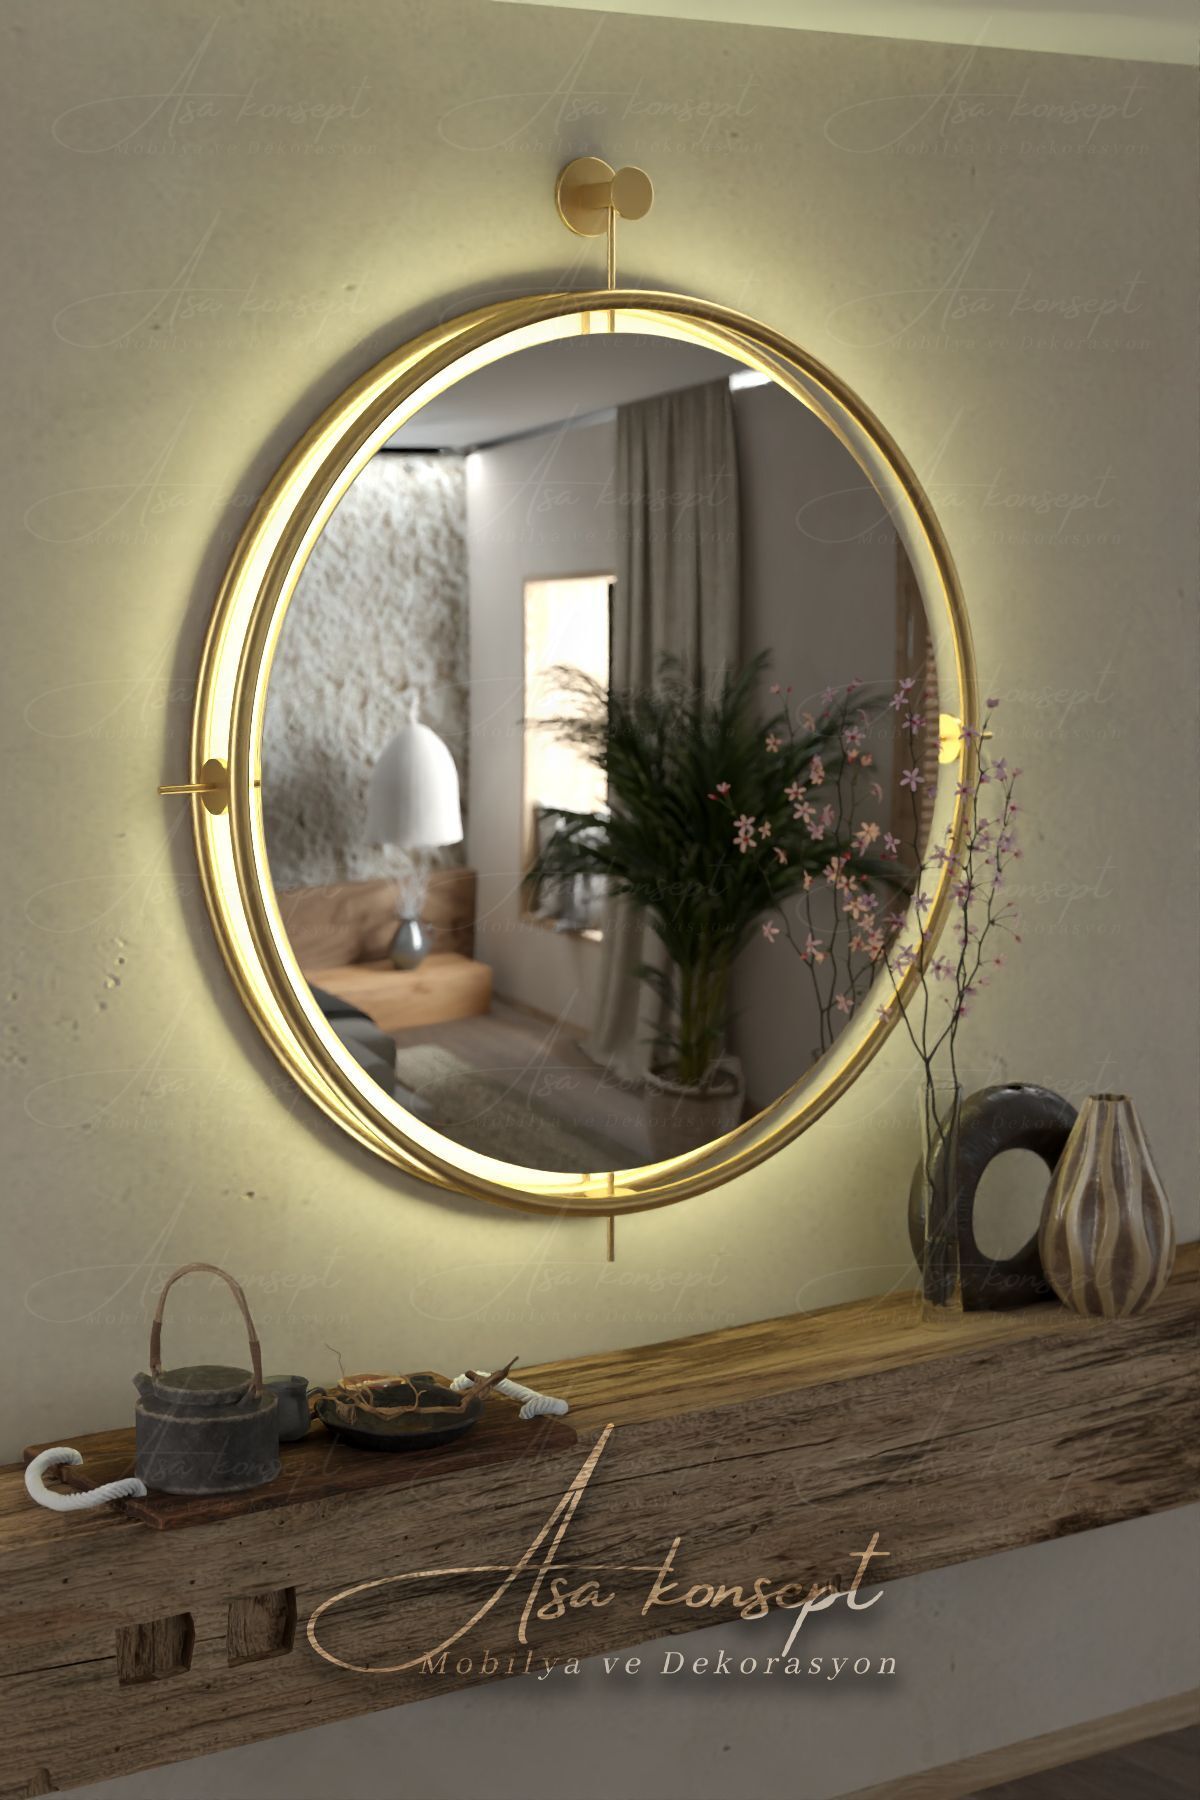 ASA KONSEPT Istanbul Gold Kablosuz Ledli Ayna, Metal Dekoratif Hol Duvar Salon Mutfak Banyo Wc Ofis Aynası